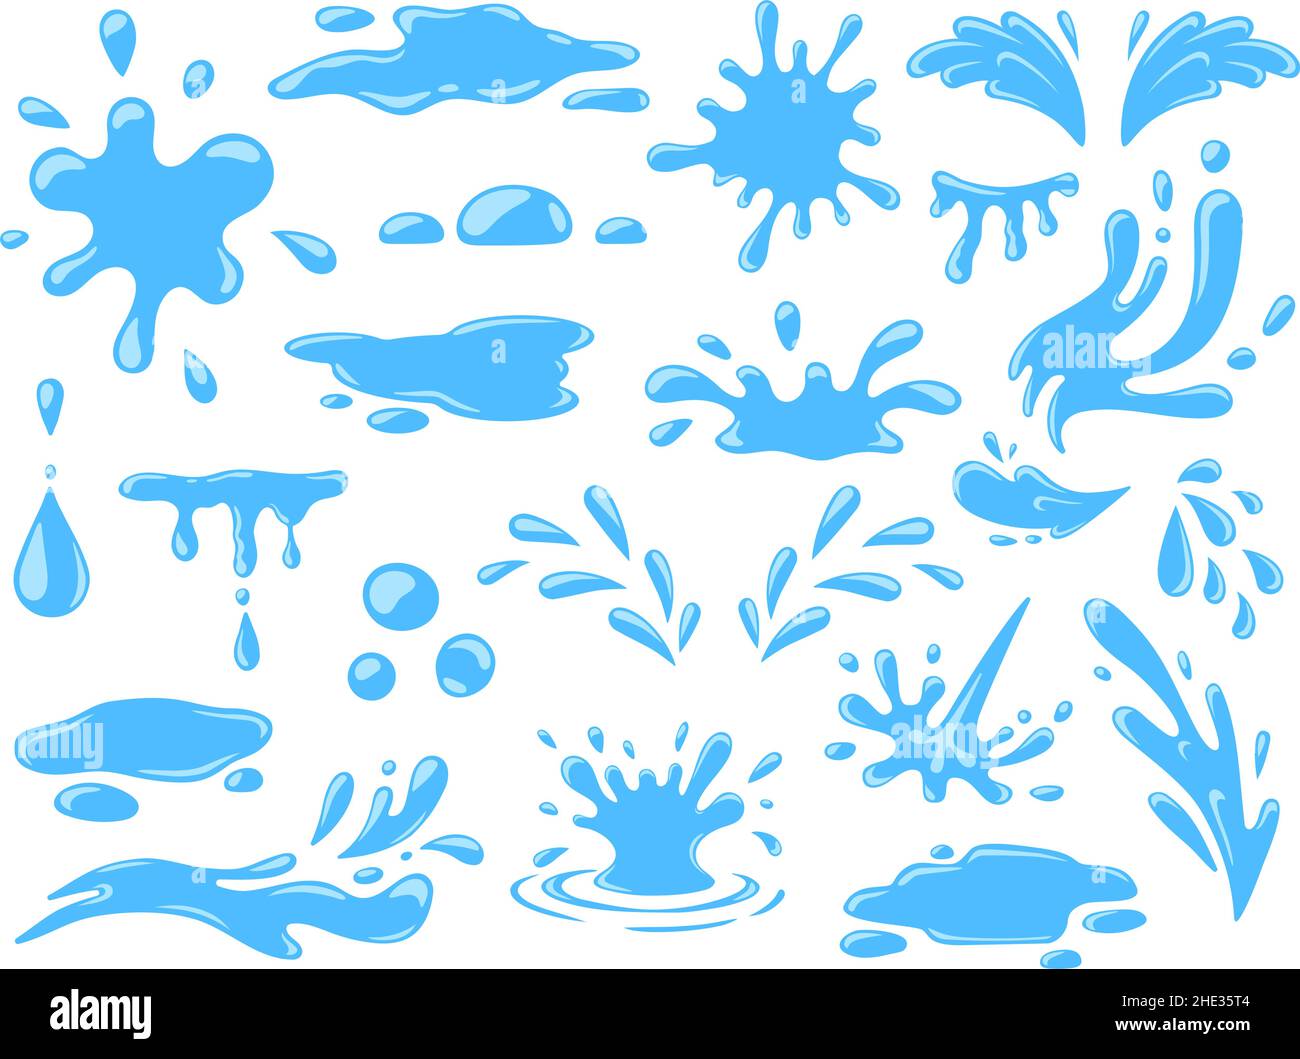 Cartoon water splashes, falling rain drops, waves and spill. Fresh aqua stream, puddles and splats. Nature blue liquid form icons vector set Stock Vector